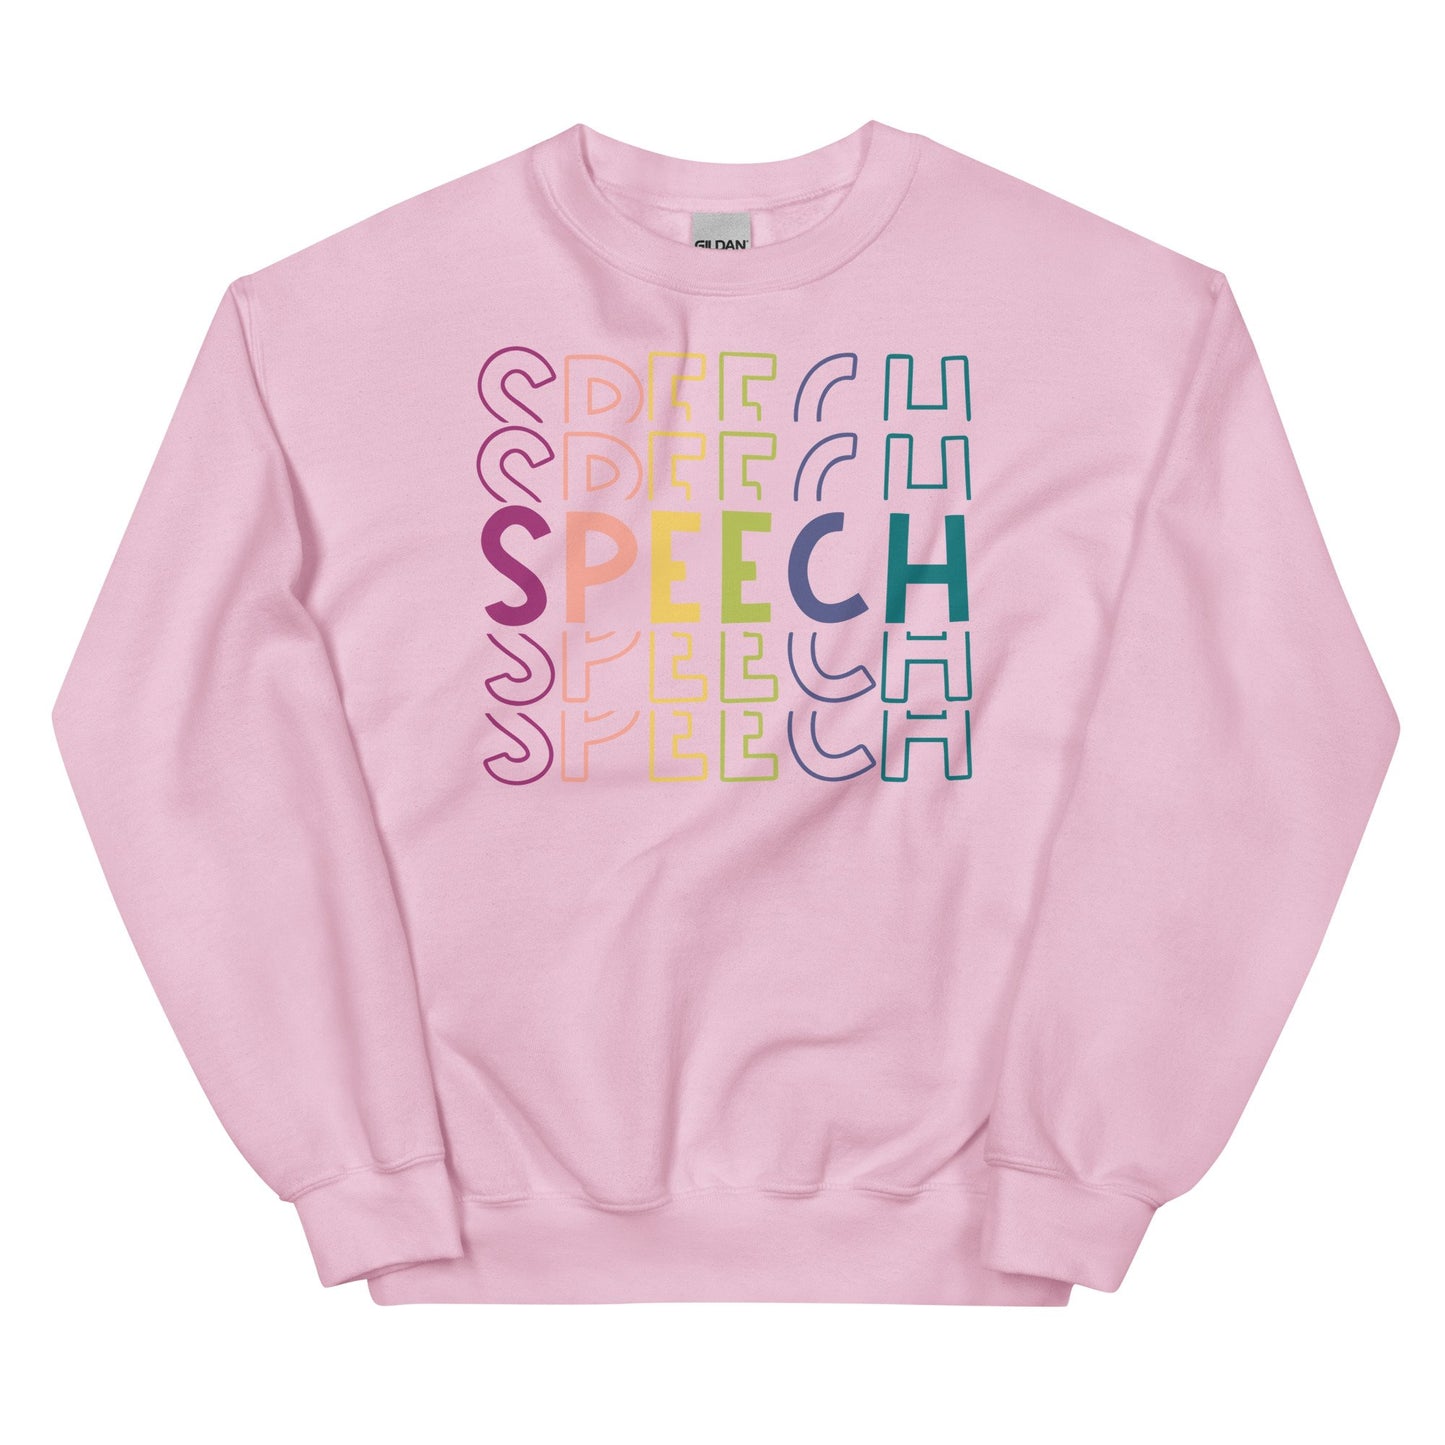 unisex-crew-neck-sweatshirt-light-pink-front-630851214e3aa.jpg